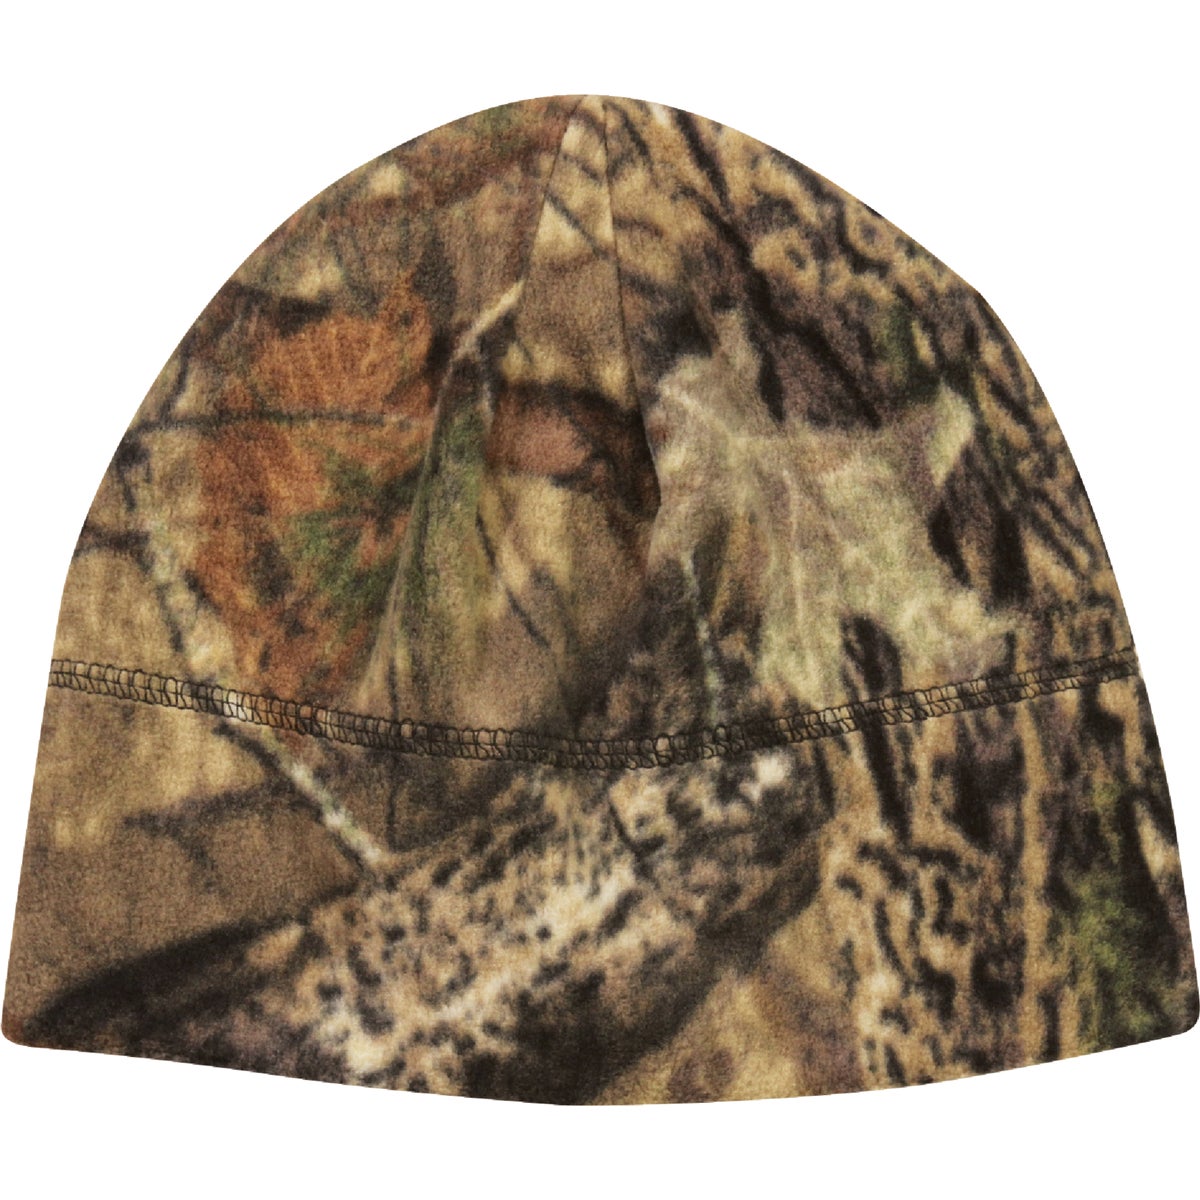 Item 767628, Mossy Oak camouflage sock hat. Fleece beanie featuring a wicking liner.